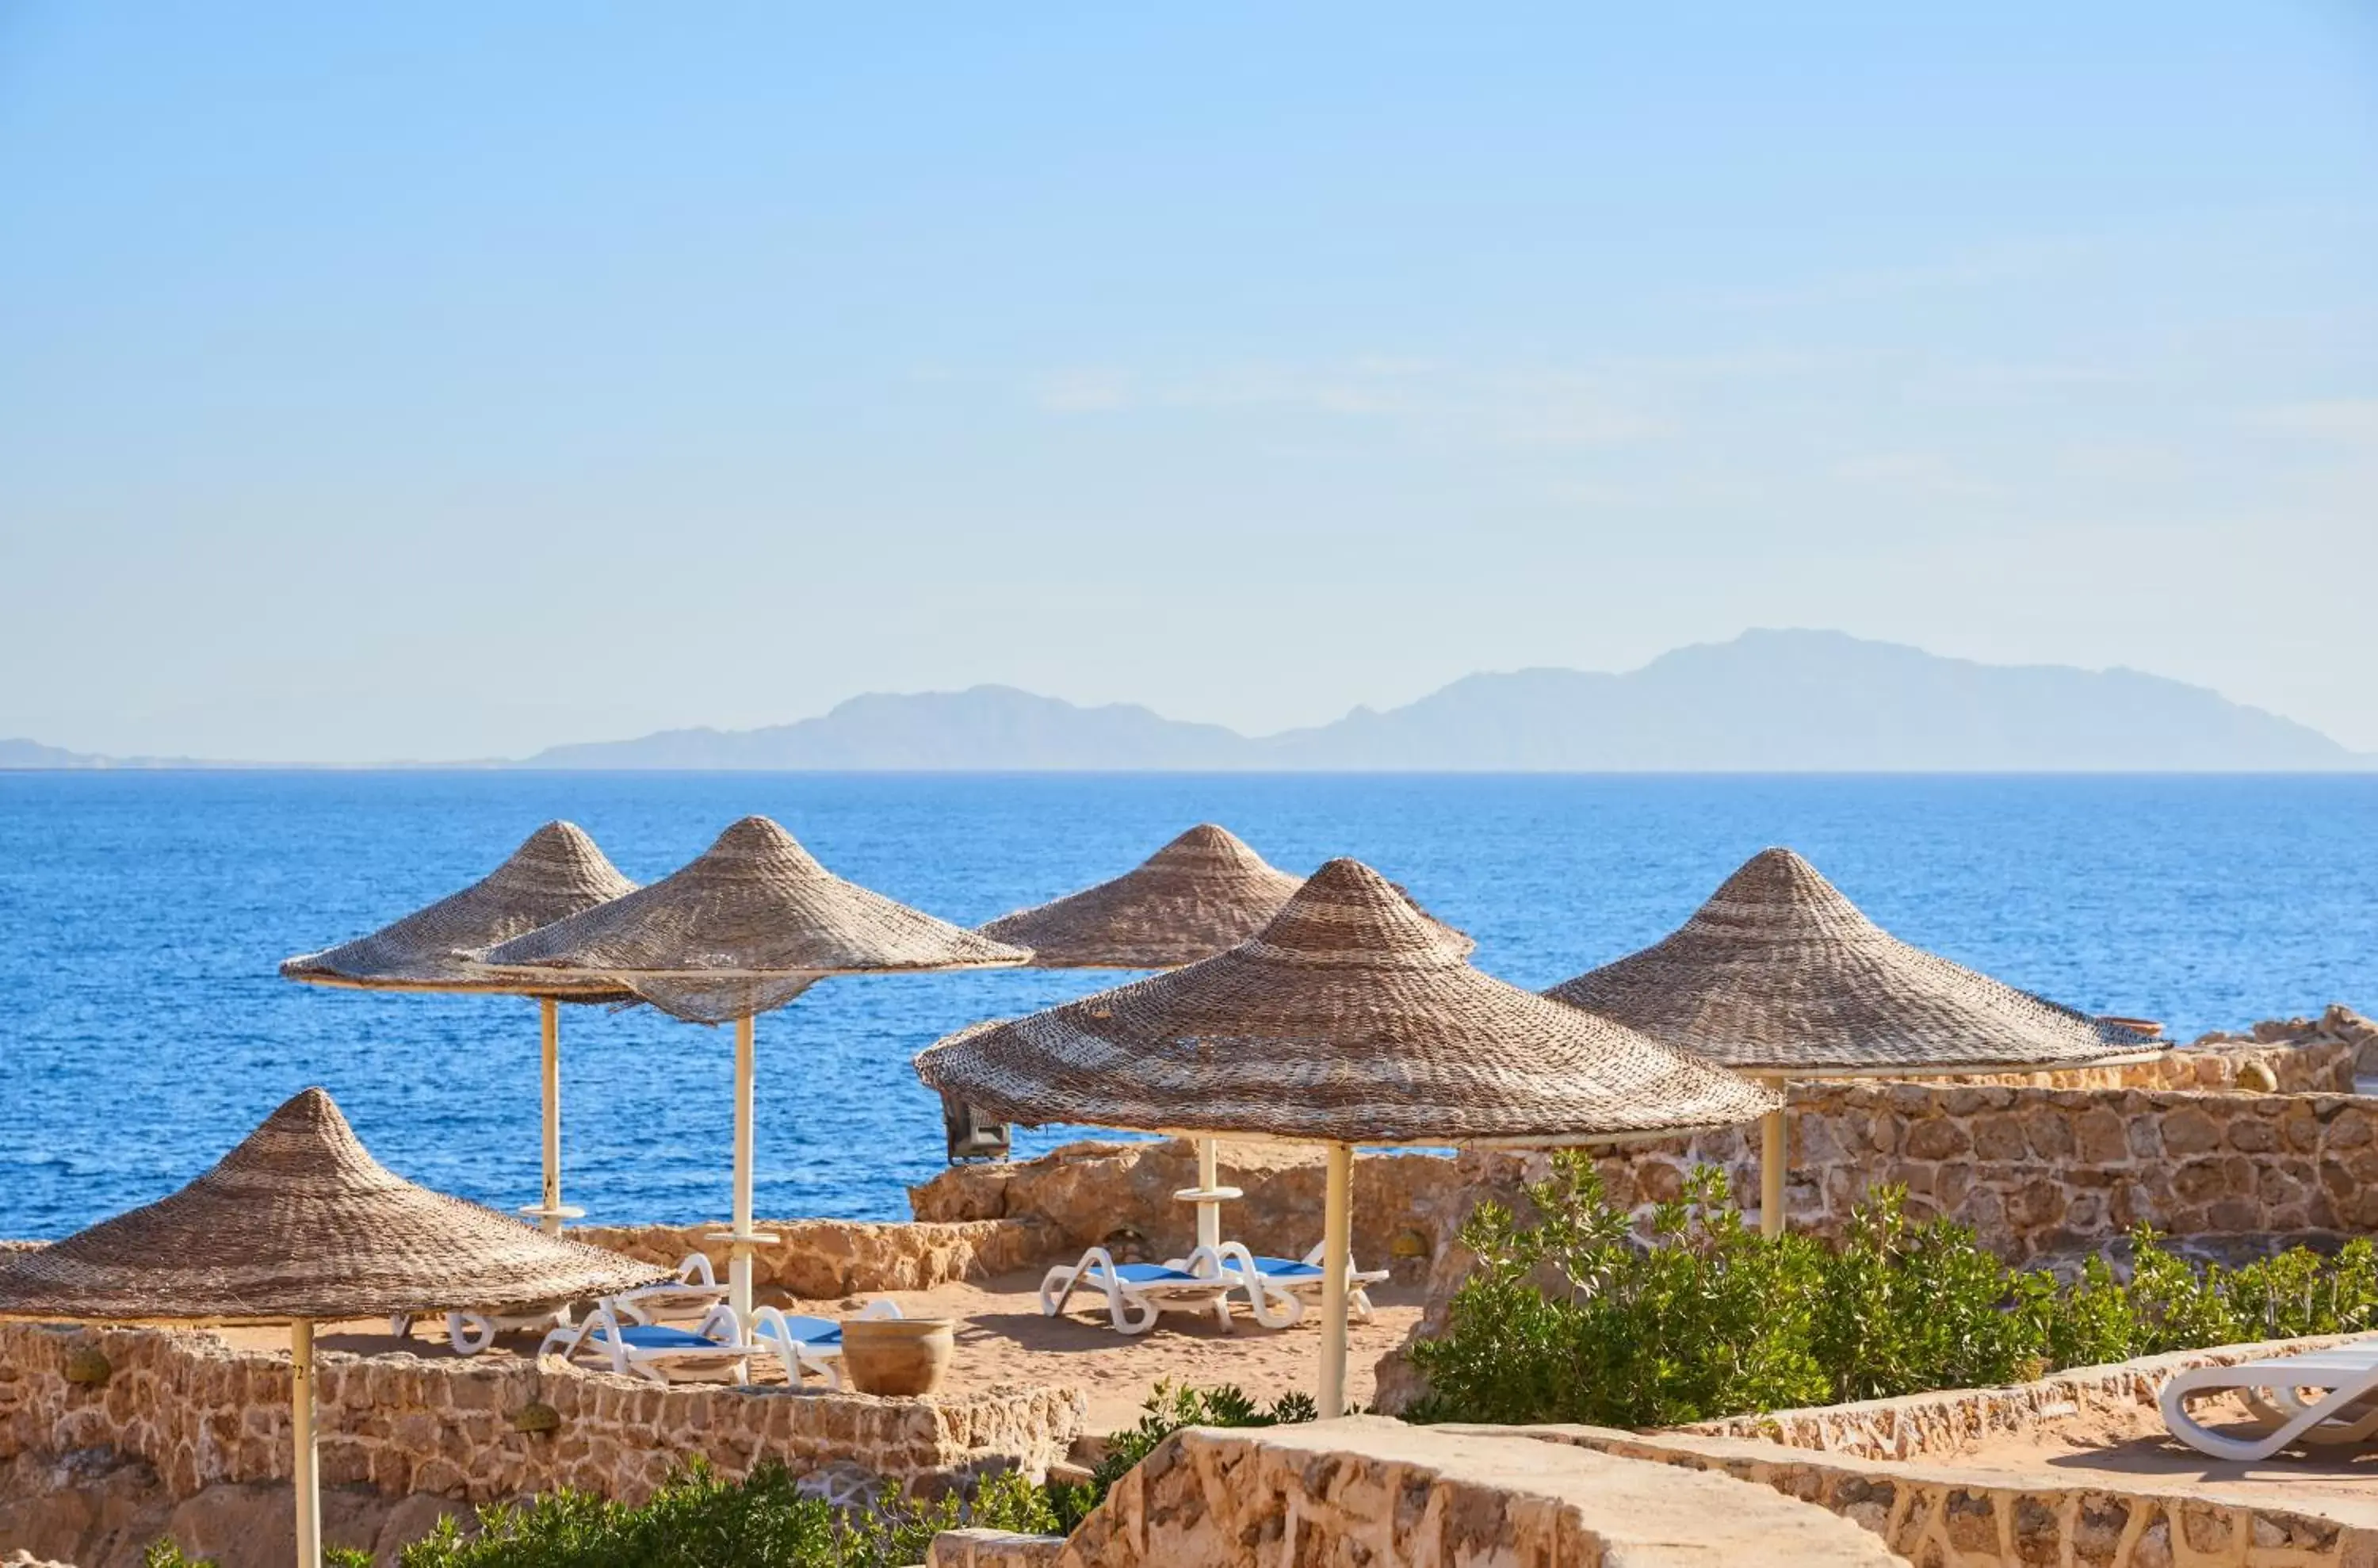 Beach in Dreams Vacation Resort - Sharm El Sheikh